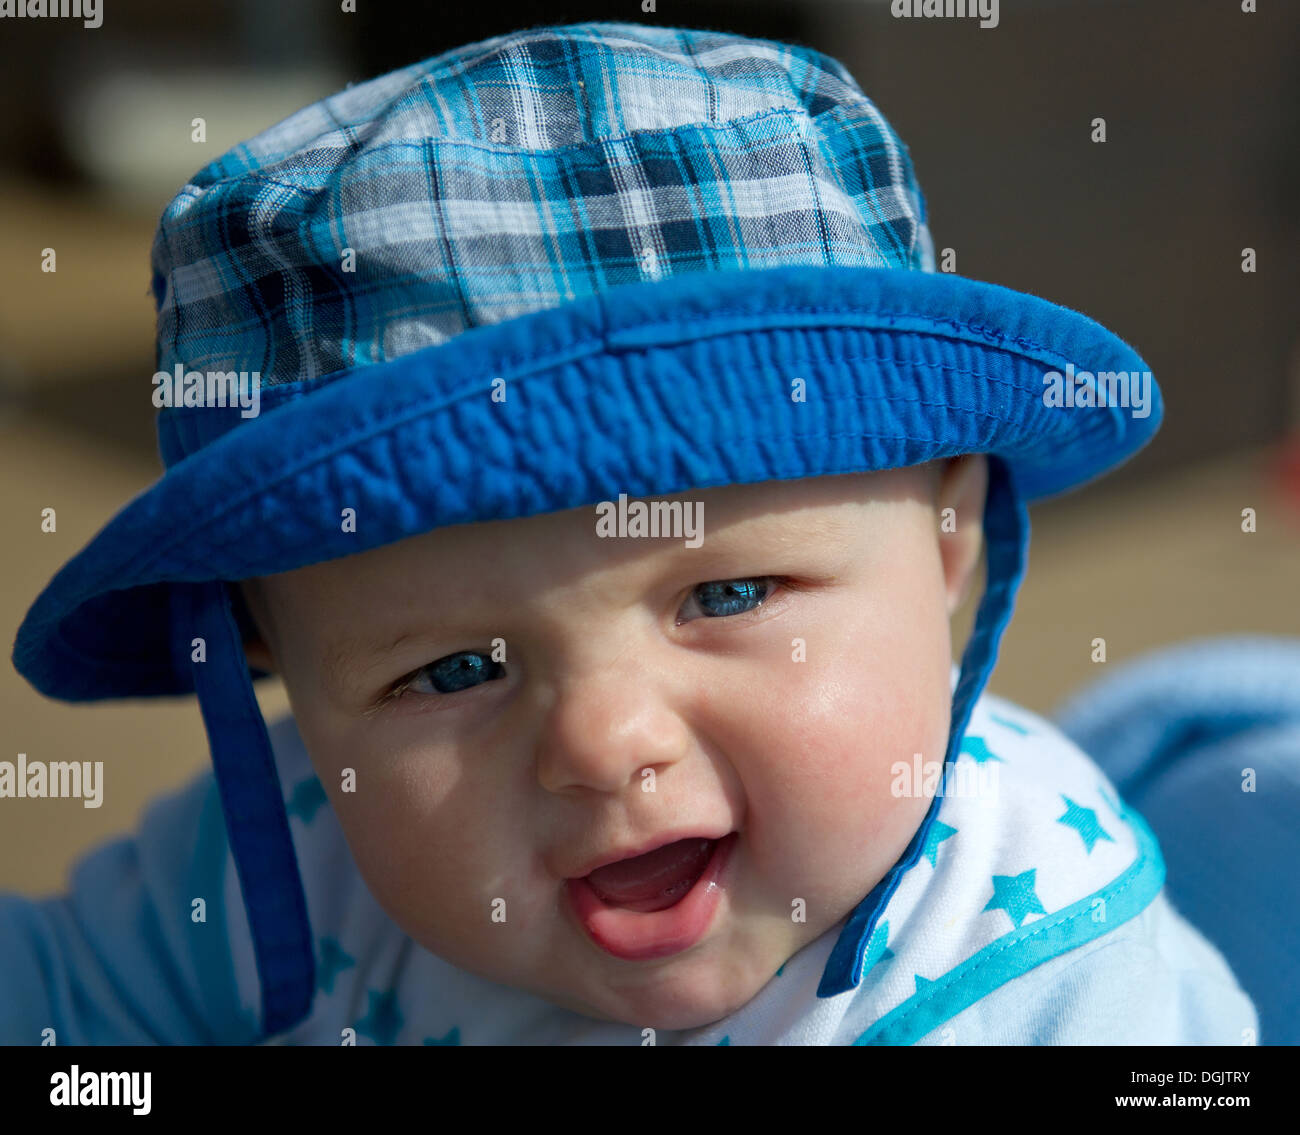 A baby boy in a sun hat. Stock Photo